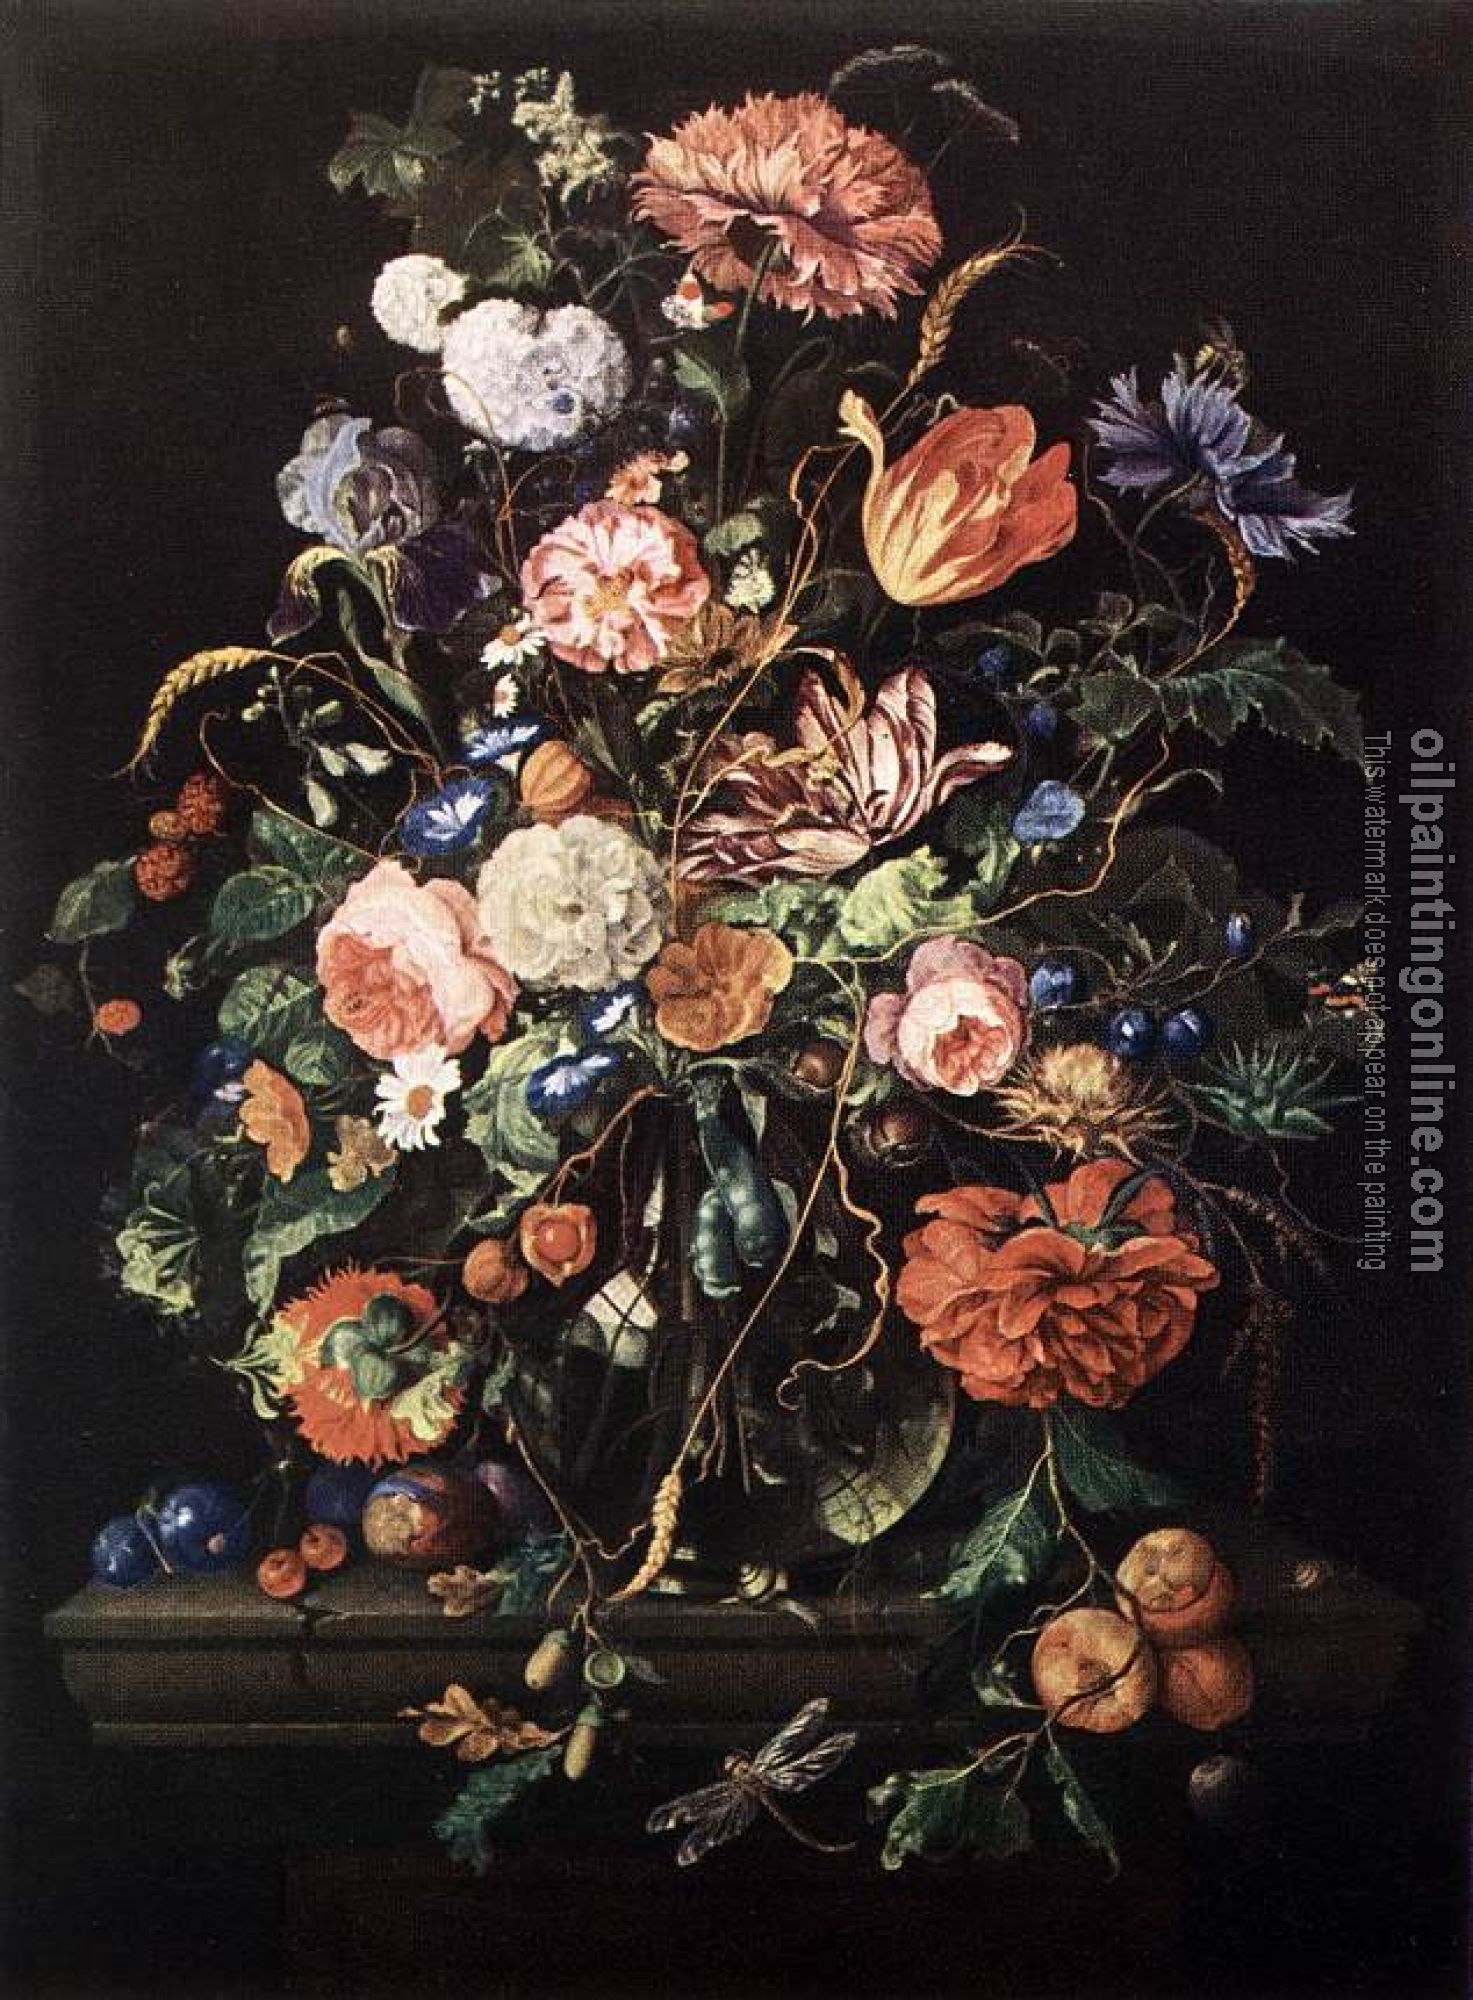 Heem, Jan Davidsz de - Flowers in Glass and Fruits